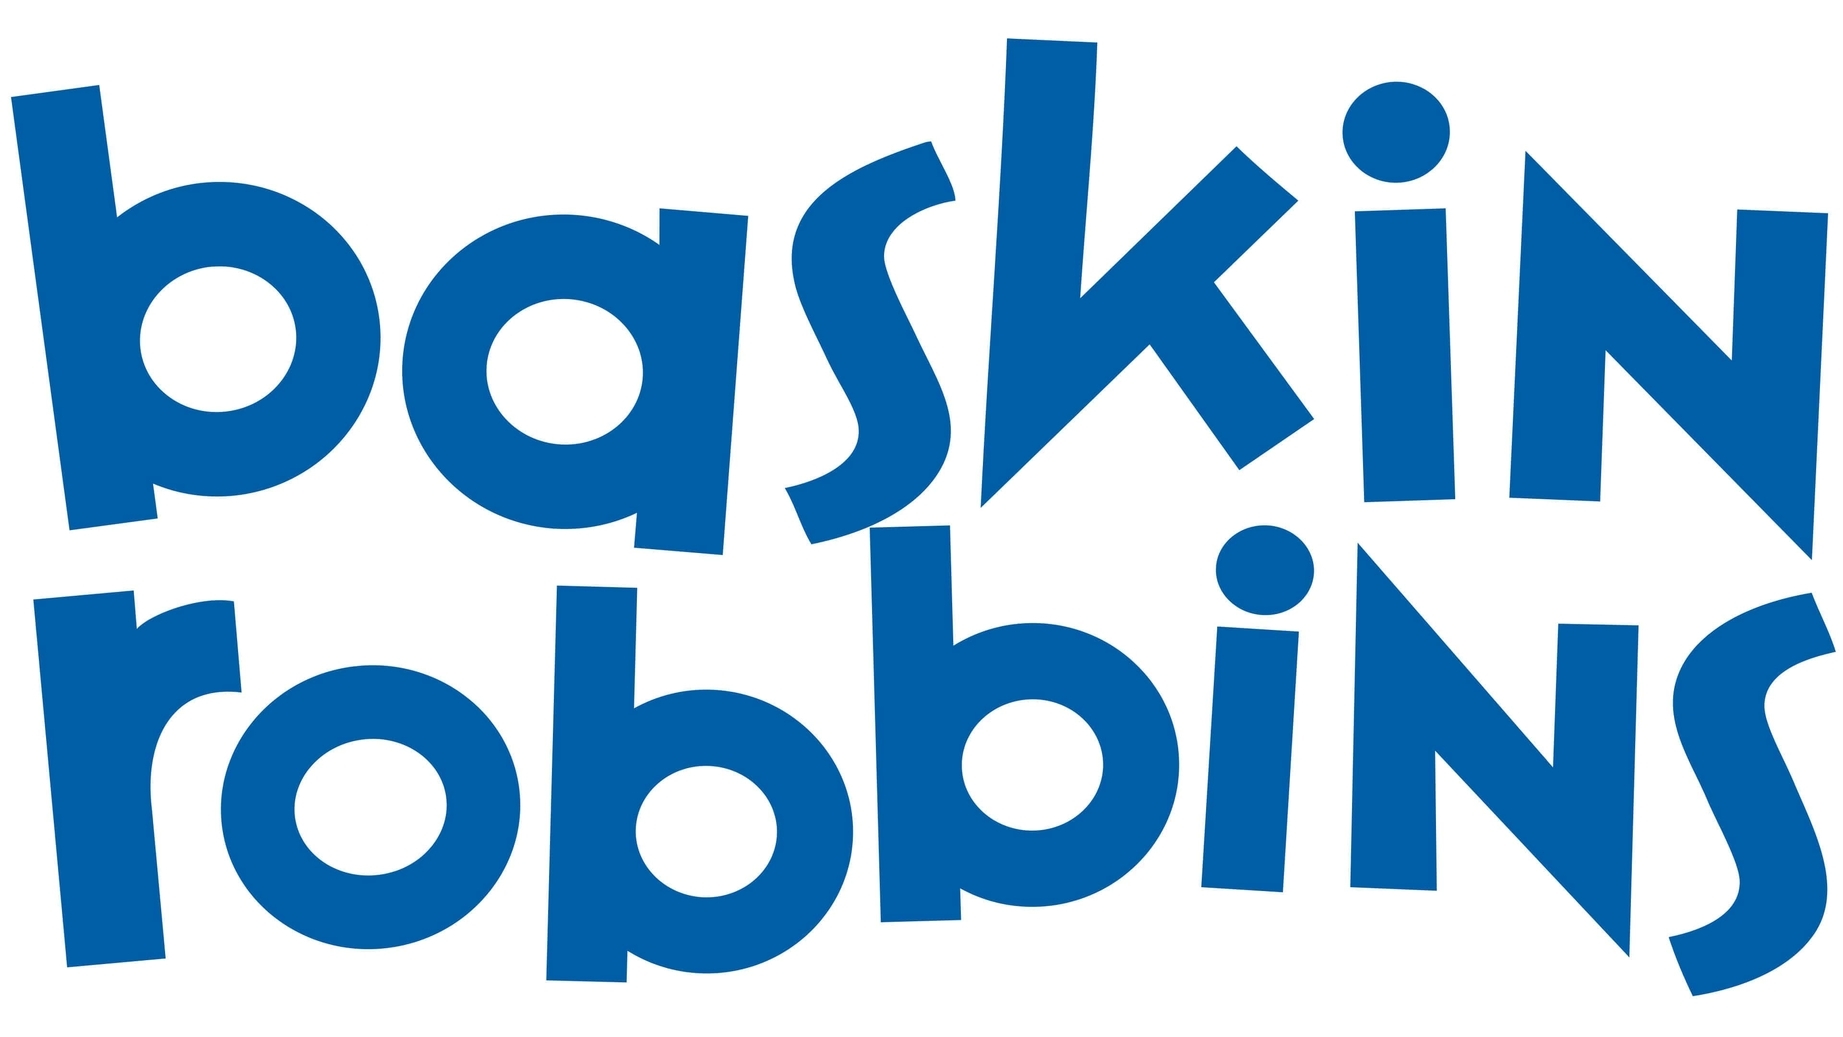 Baskin robbins woodmark sign